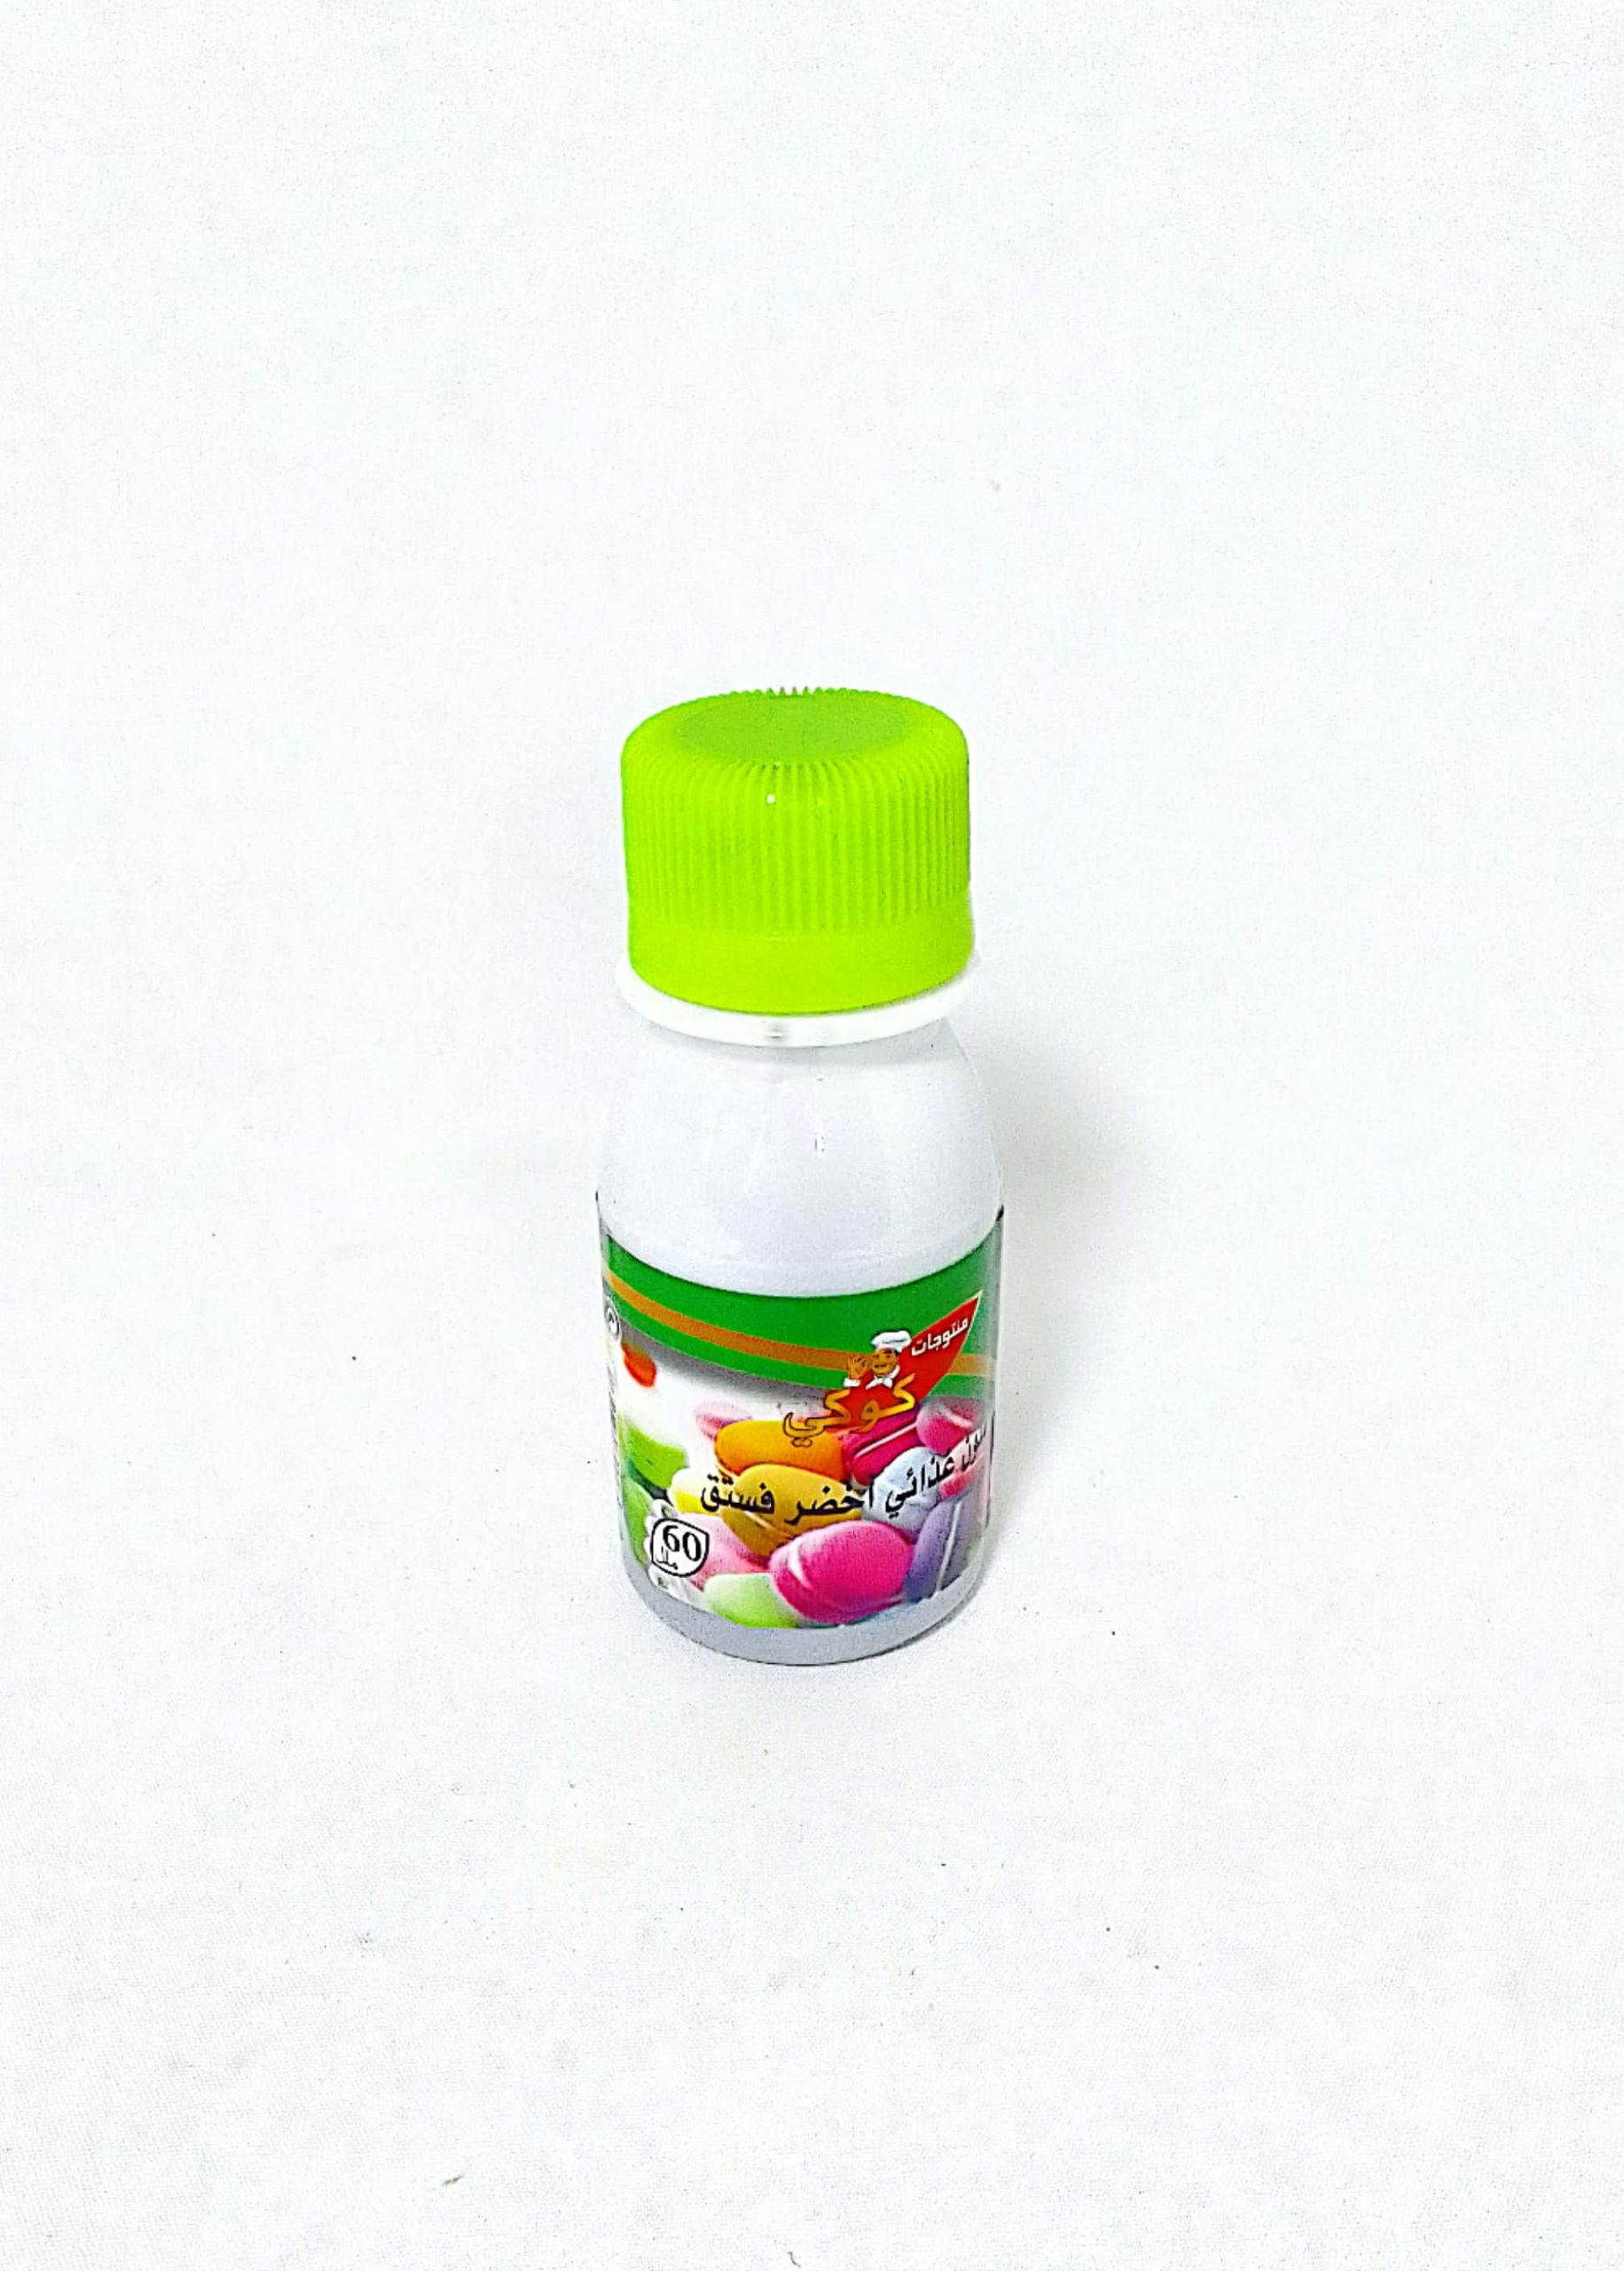 Coki Colorant alimentaire vert 60ml